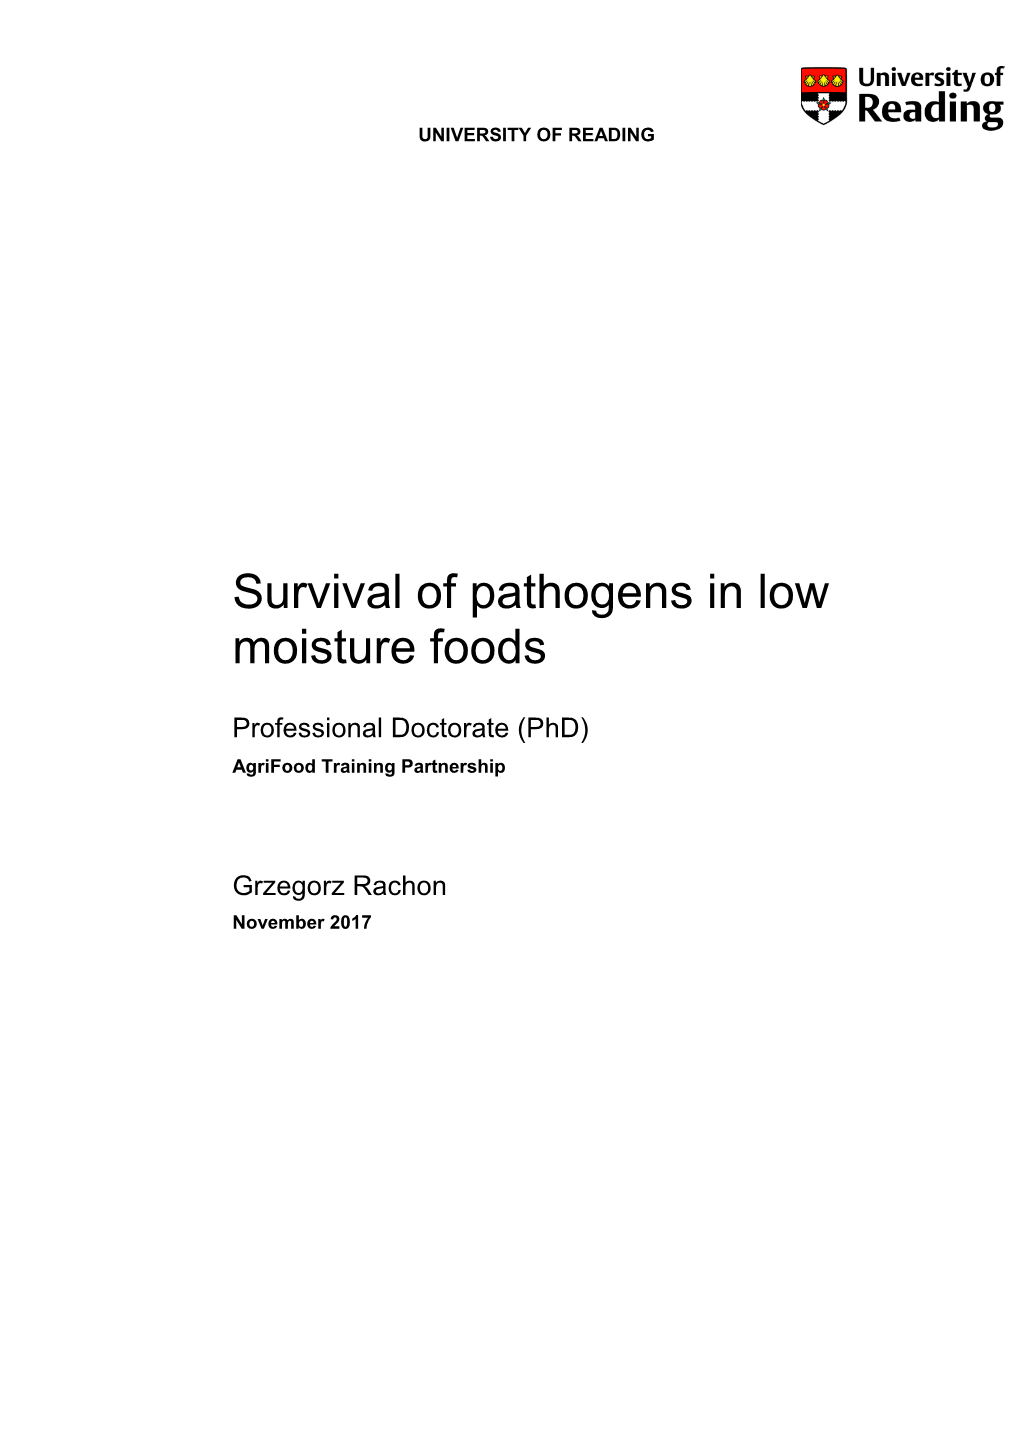 Survival of Pathogens in Low Moisture Foods